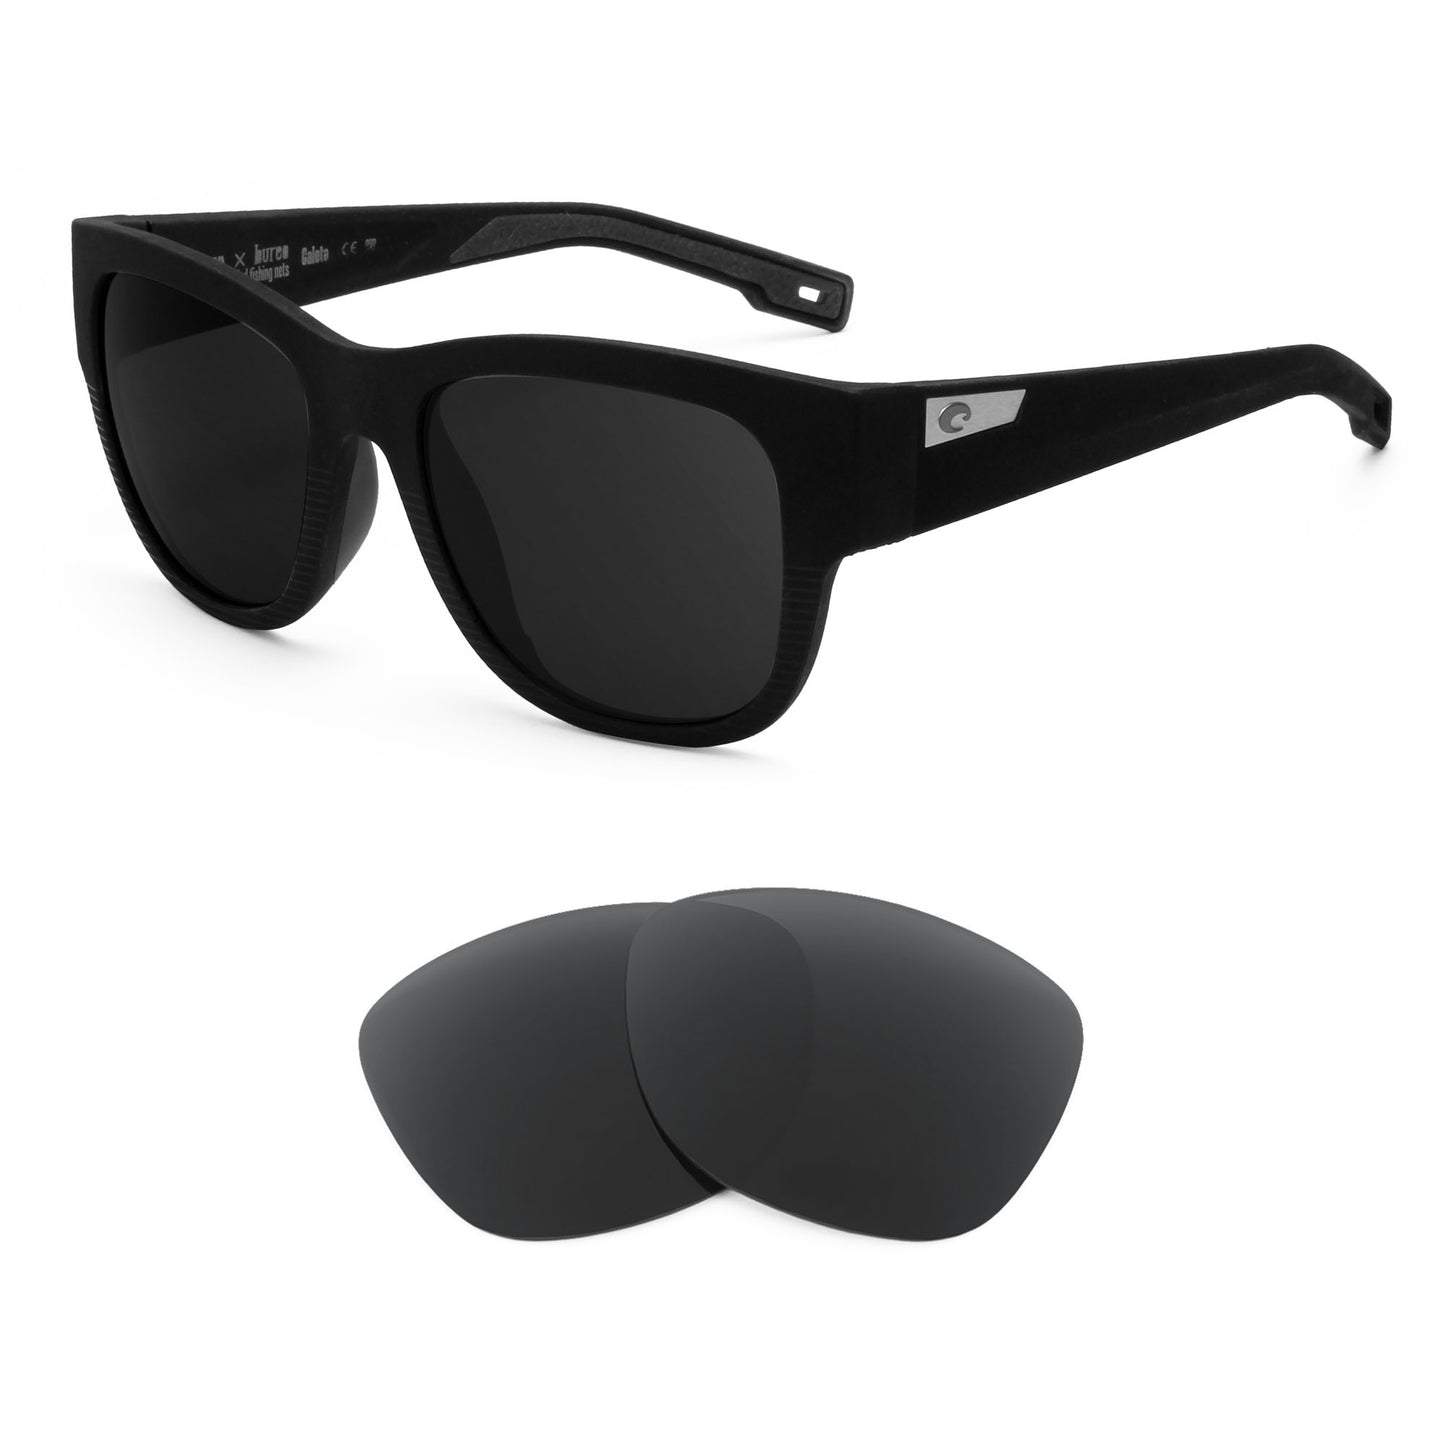 Costa Caleta sunglasses with replacement lenses